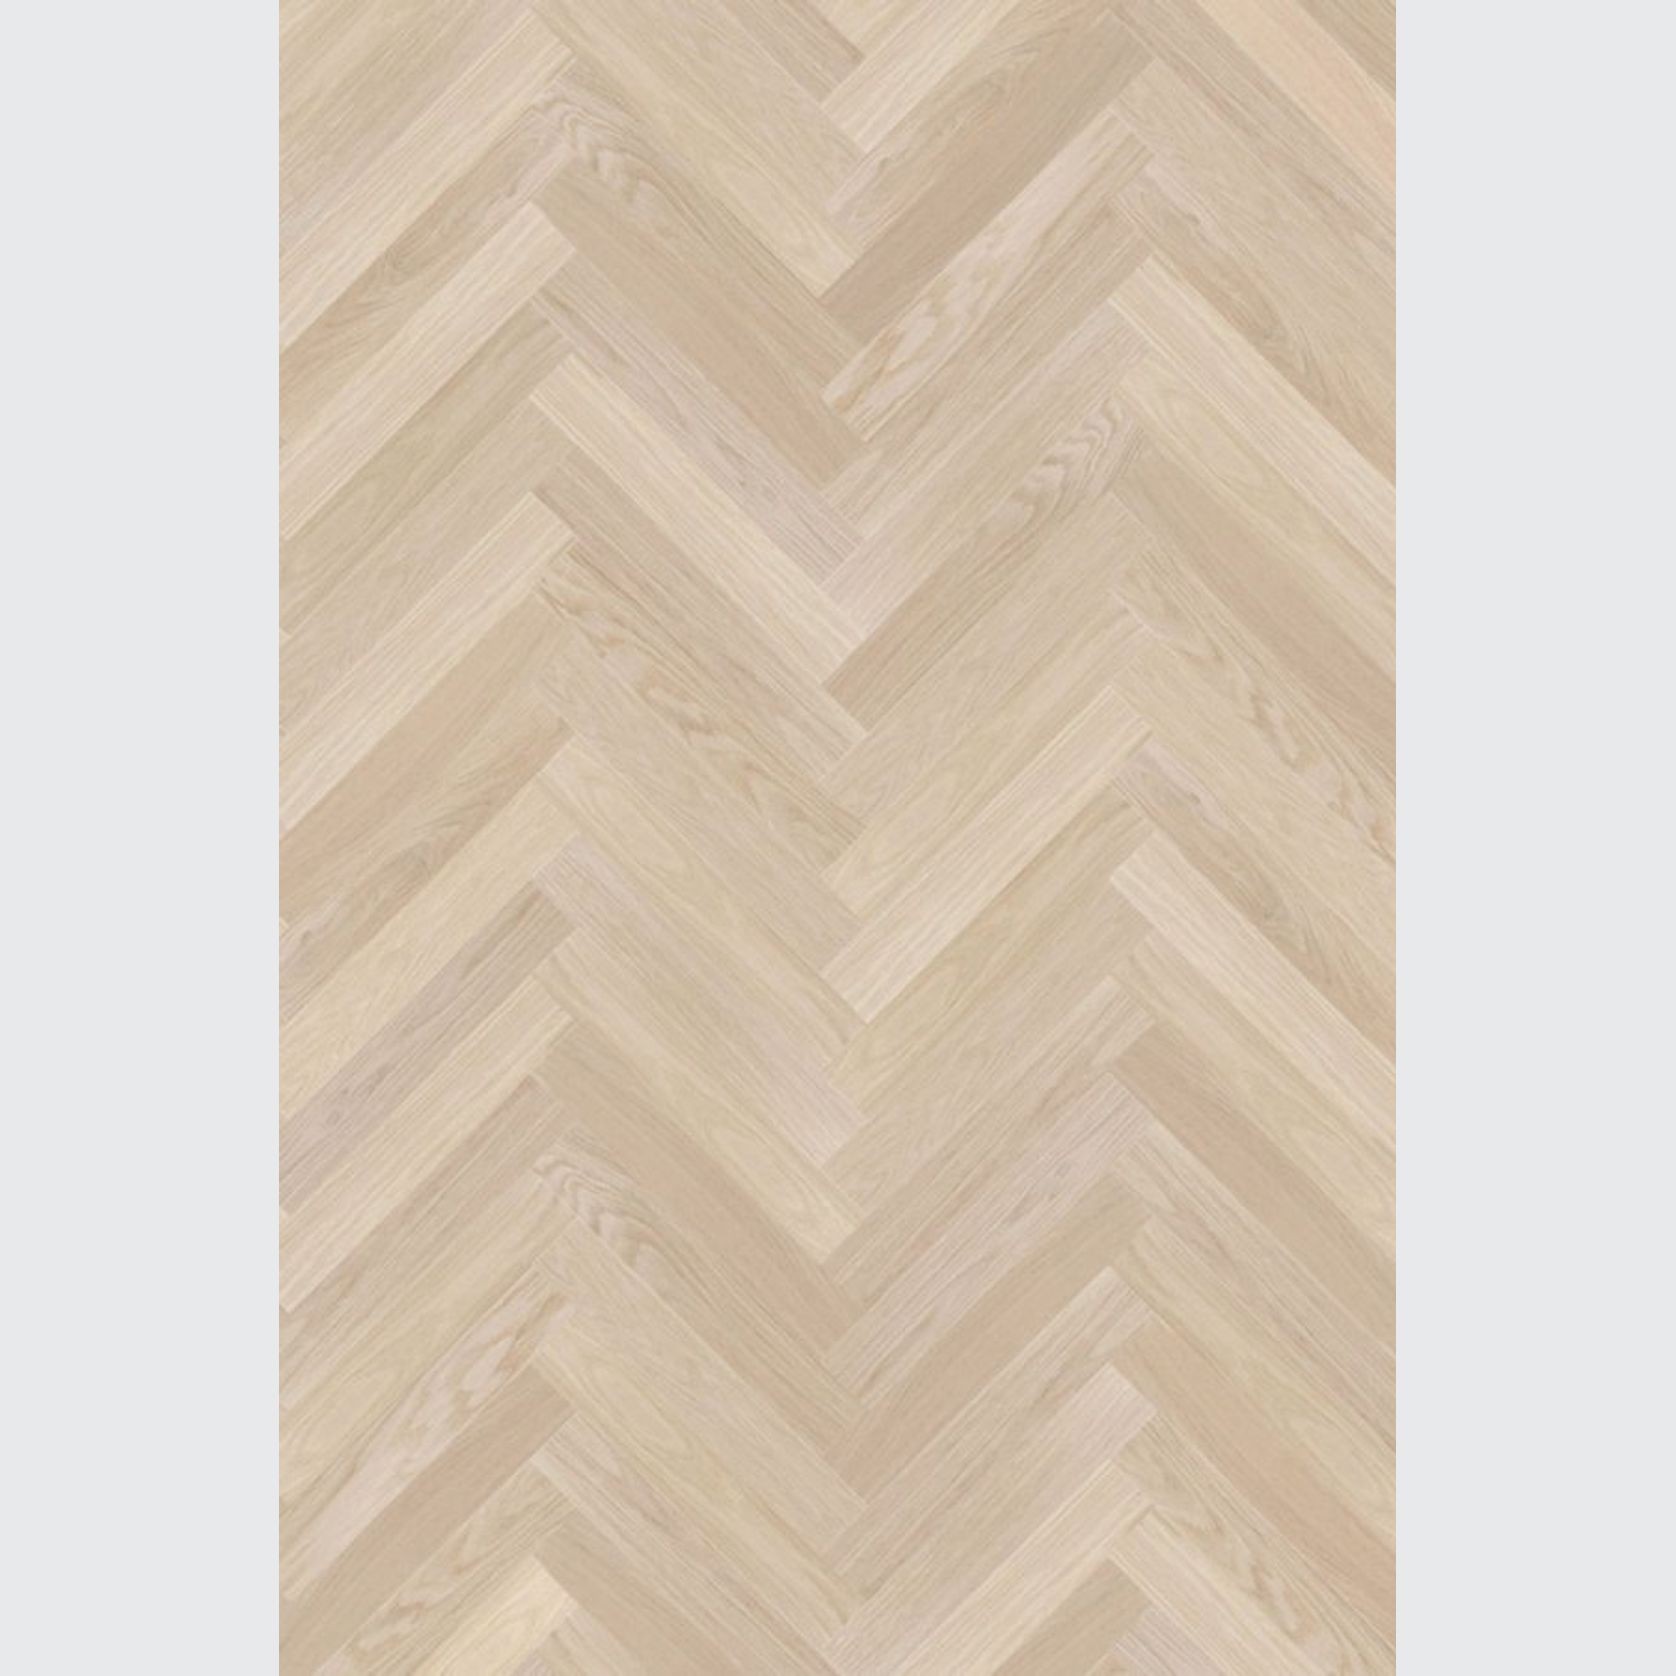 Moda Altro Capri Light Feature Herringbone Timber Flooring gallery detail image